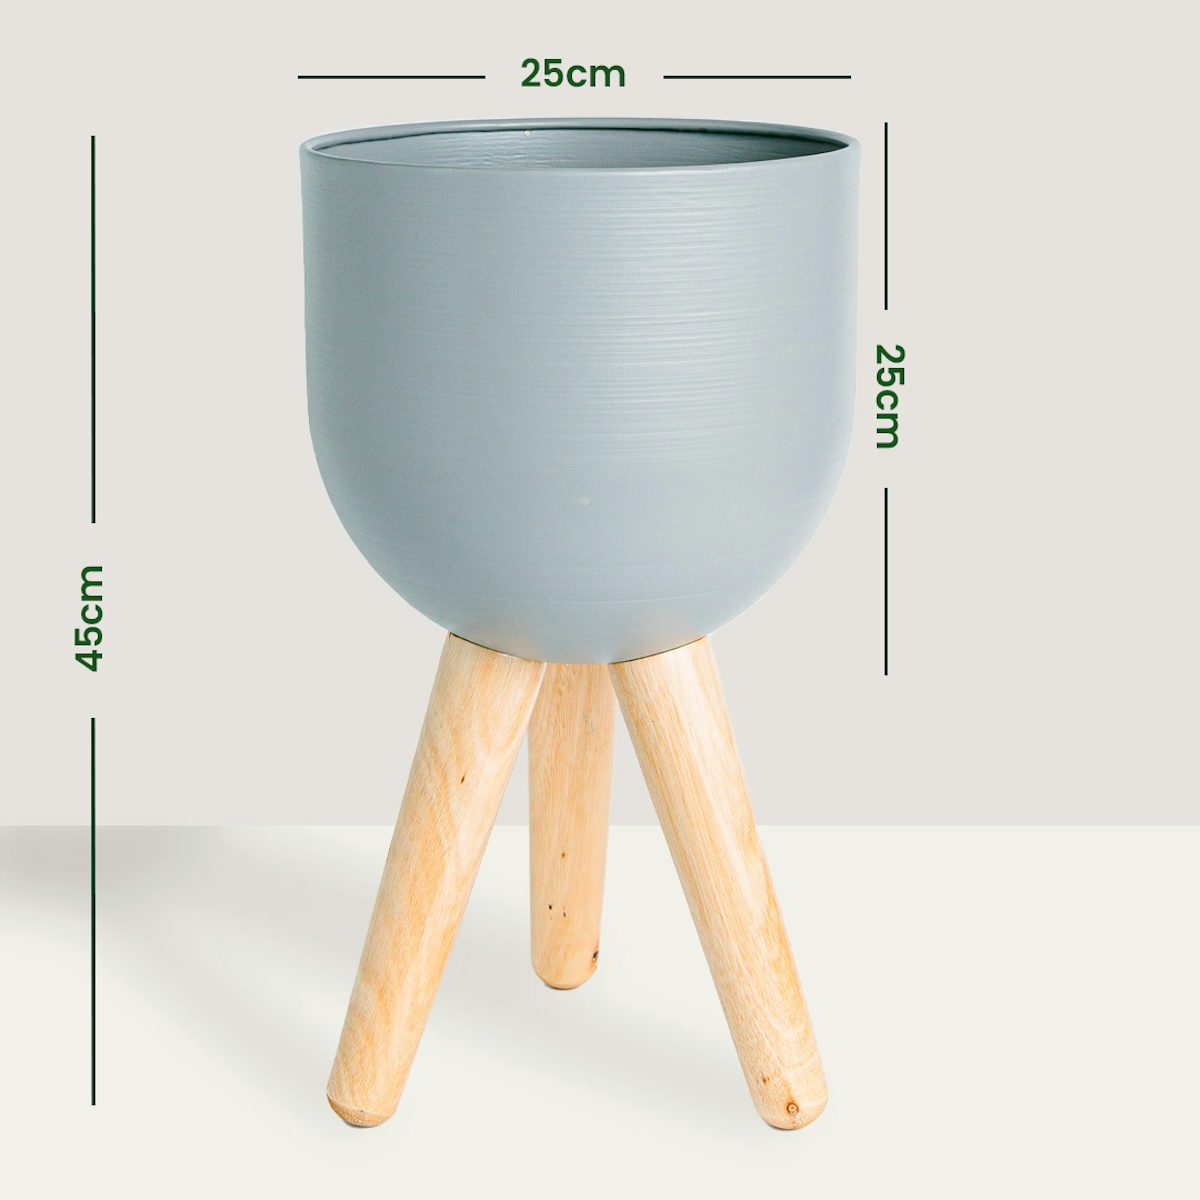 Malmo tall pot - XL/25cm